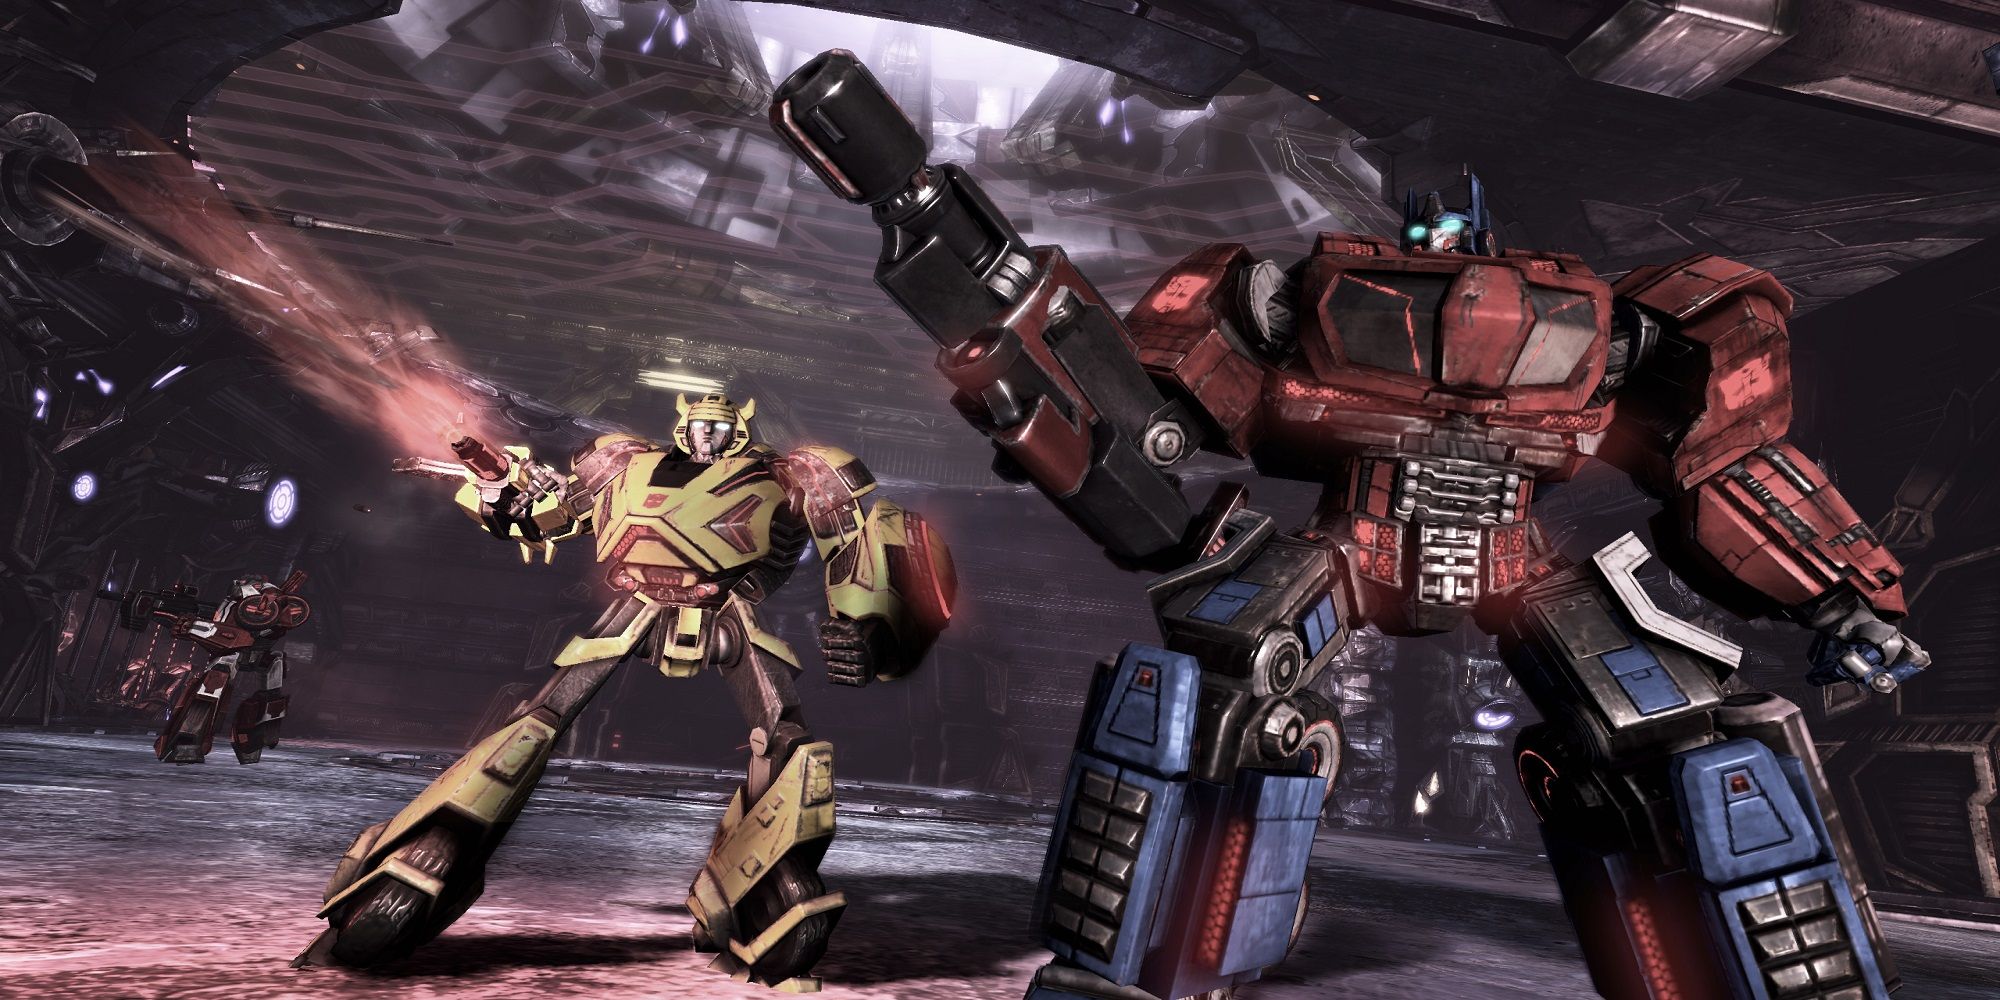 transformers war for cybertron siege release date